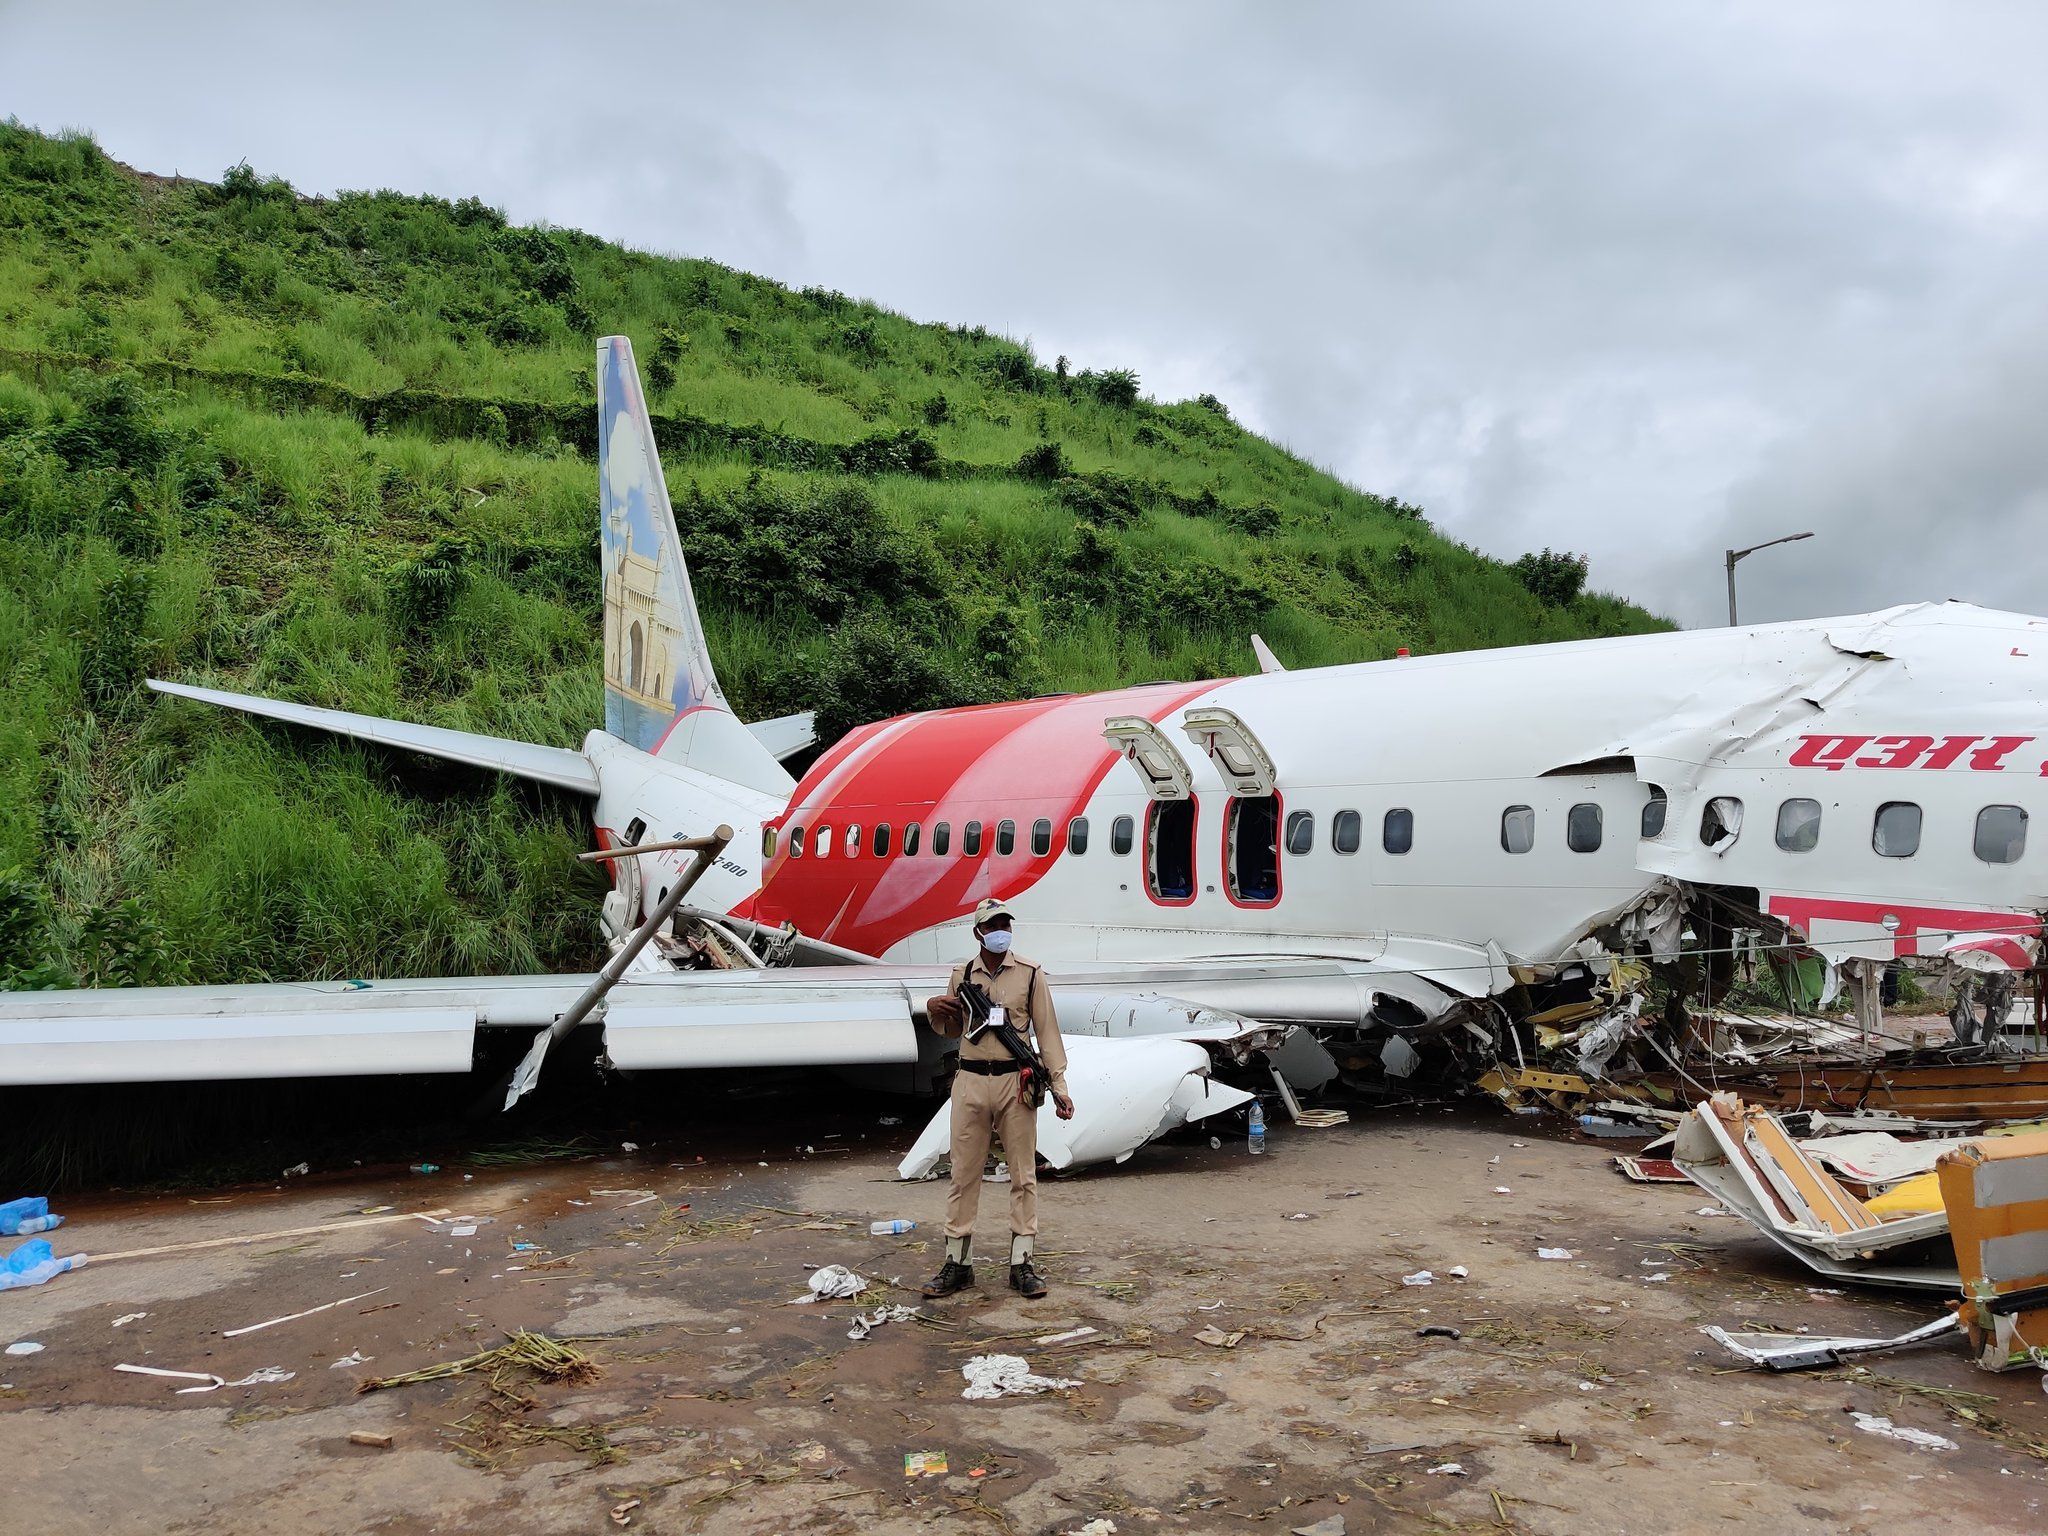 Kozhikode Airport crash victims received interim compensation, says Air India